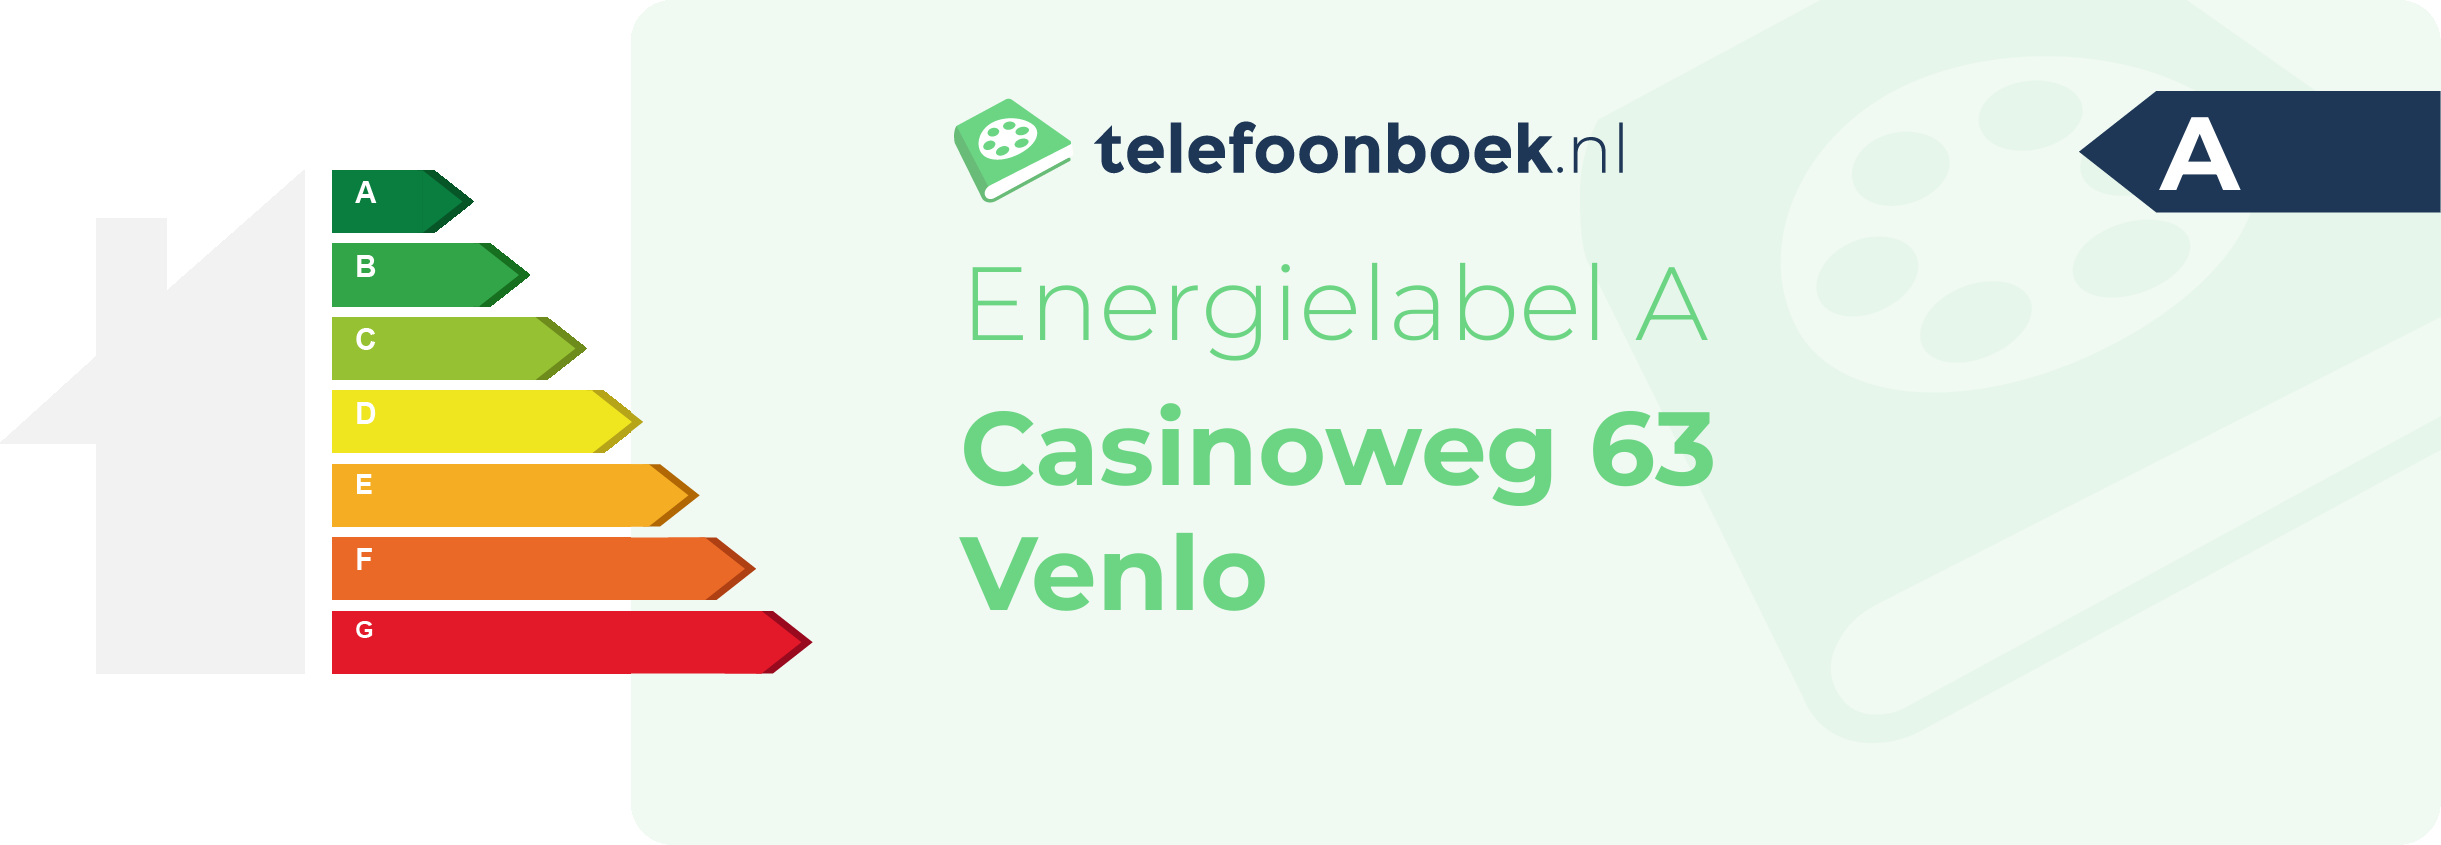 Energielabel Casinoweg 63 Venlo